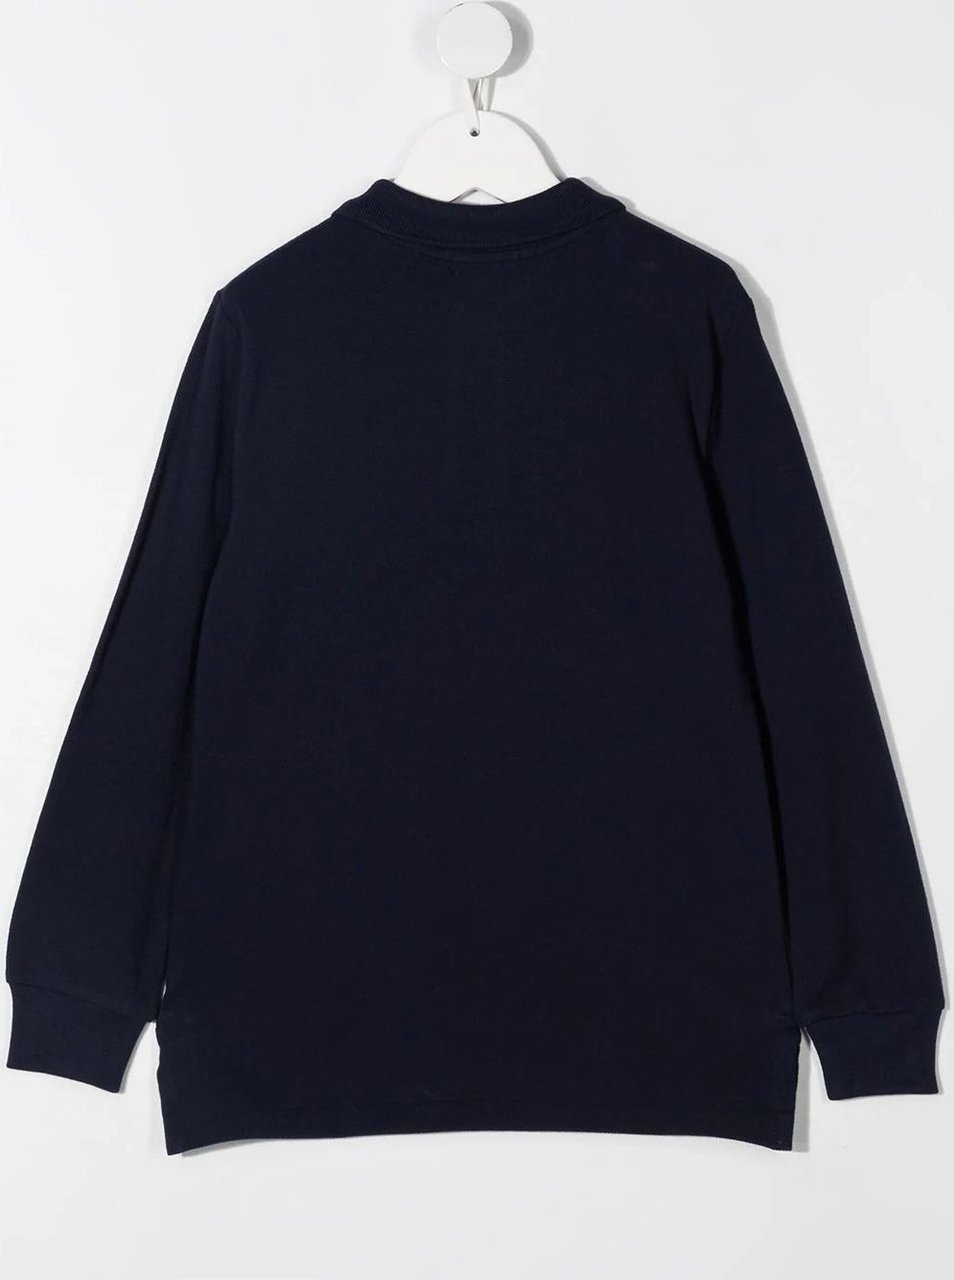 Ralph Lauren ls top knit darkblue (navy) Blauw